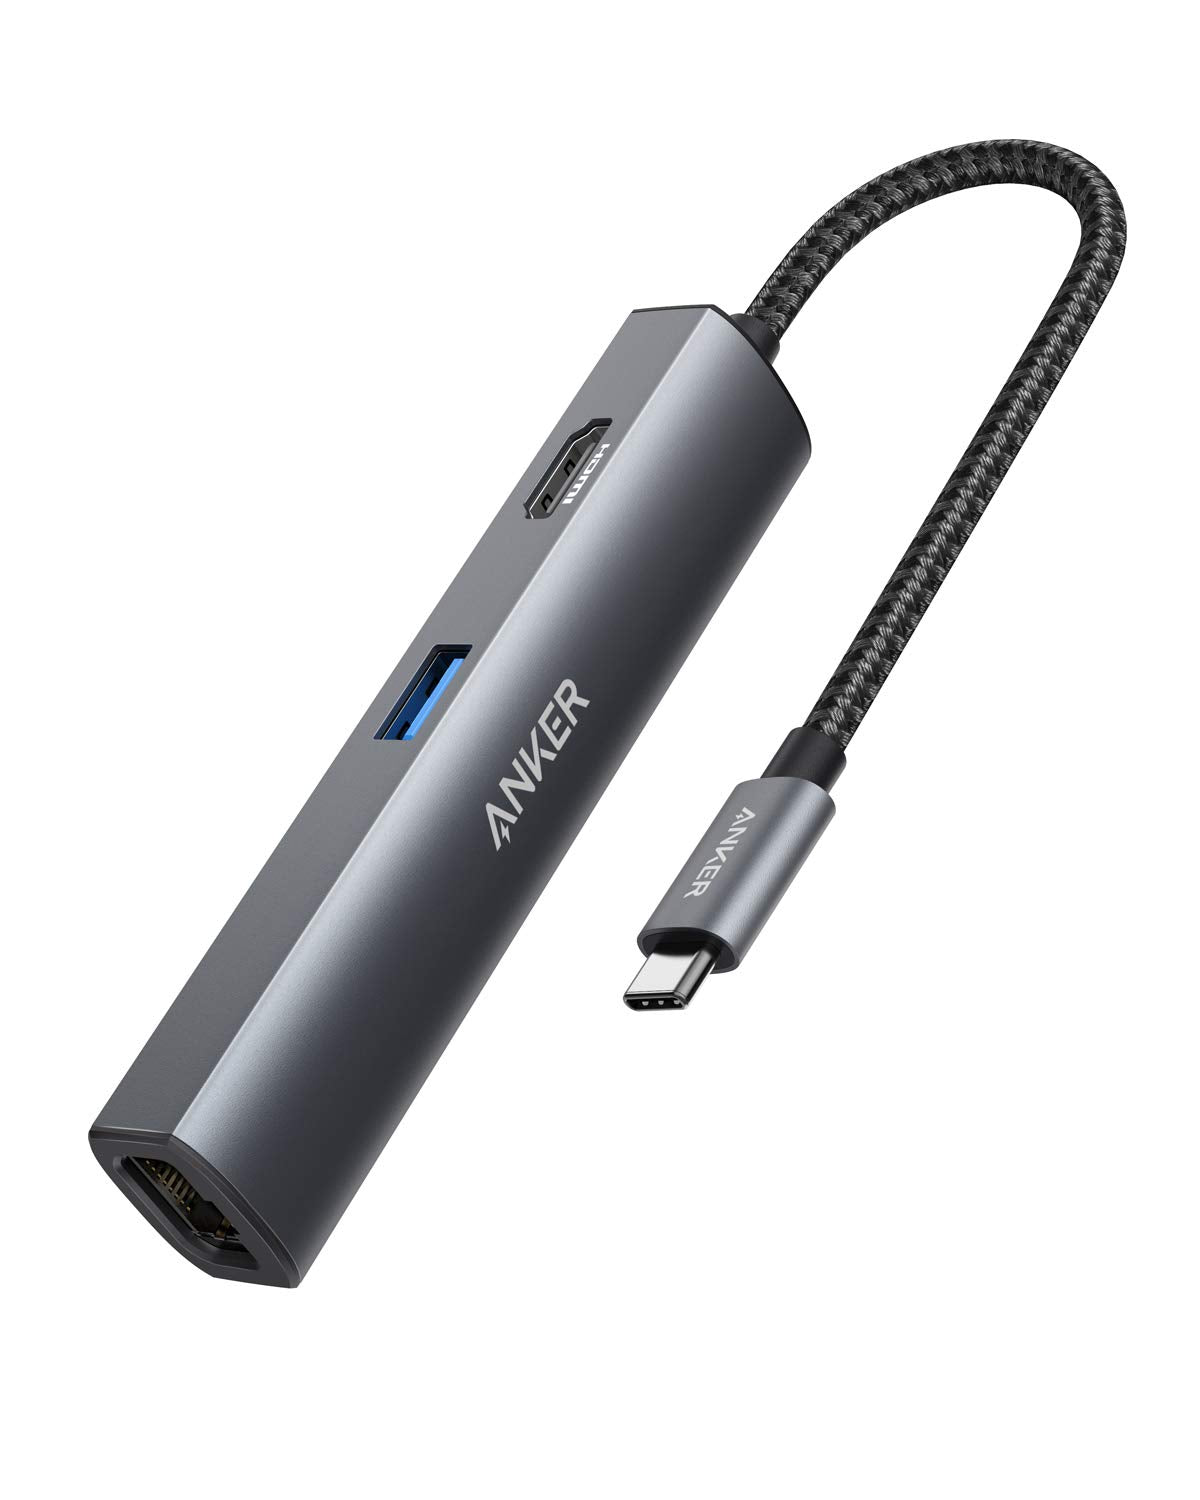 USB C Hub, Multi-Port USB Type-C Hub with 4K HDMI, Power Delivery 100 W | 3  USB 3.0 Port | 1 Type-C 3.0 Port | USB Splitter Adapter for MacBook, Mac